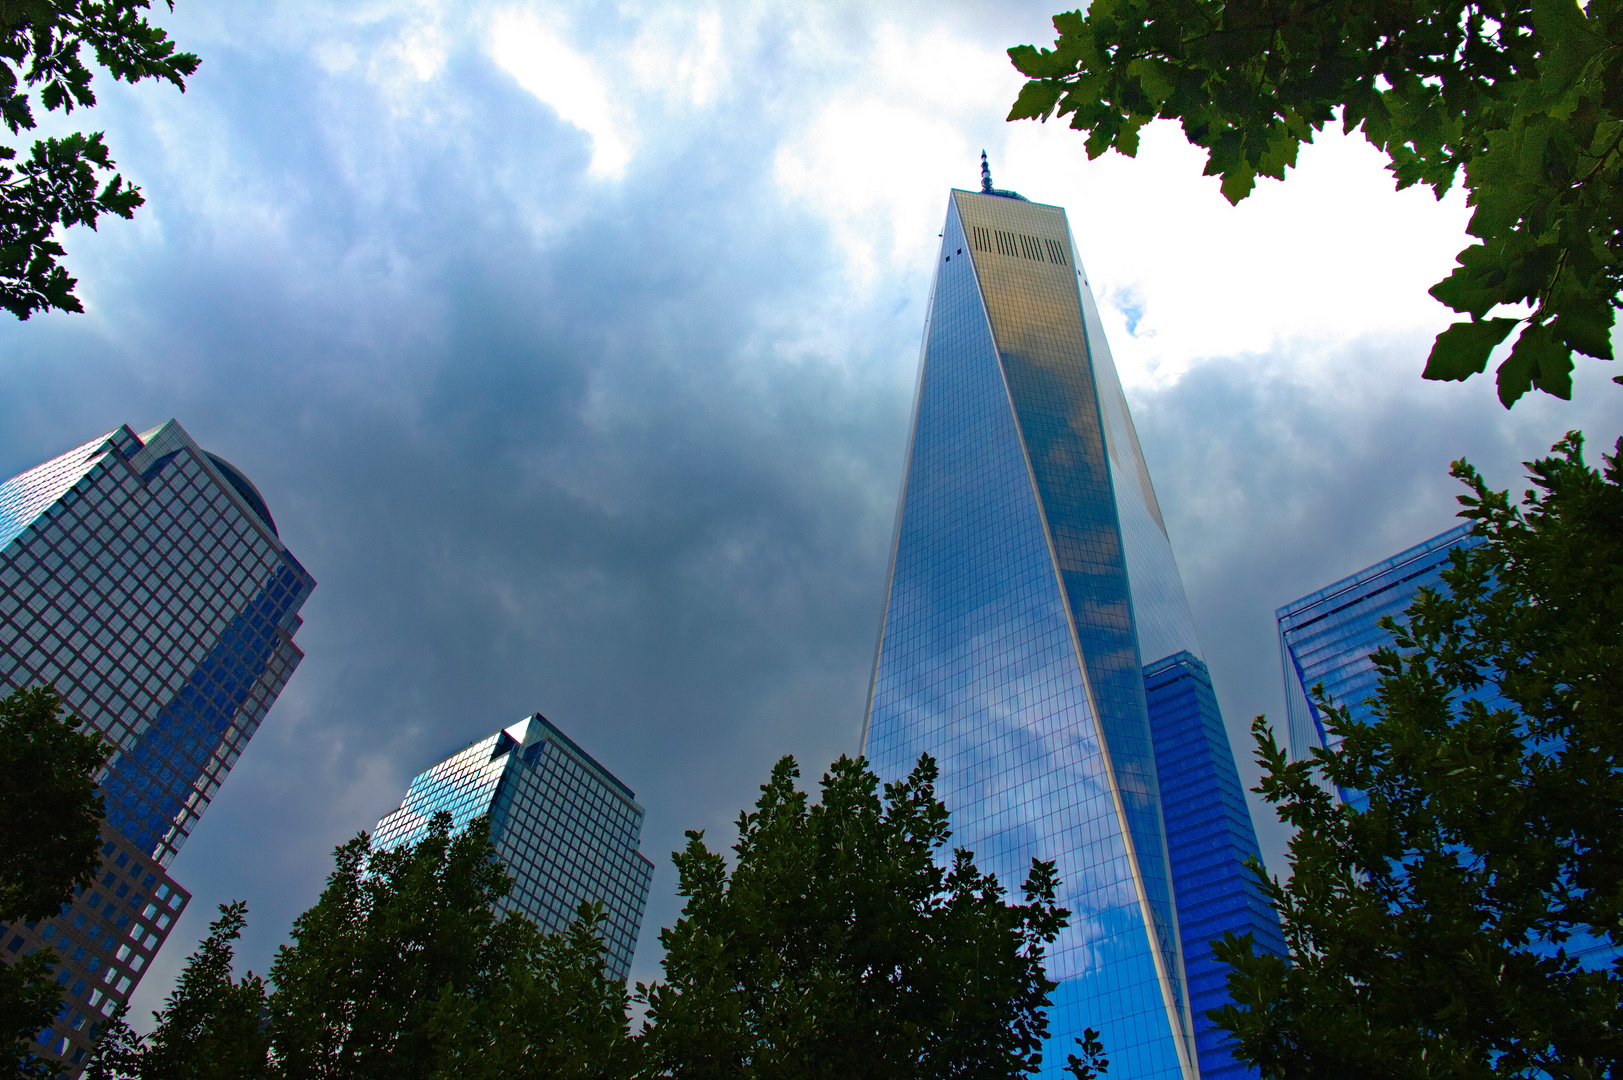 Freedom Tower/One World Trade Center New York City